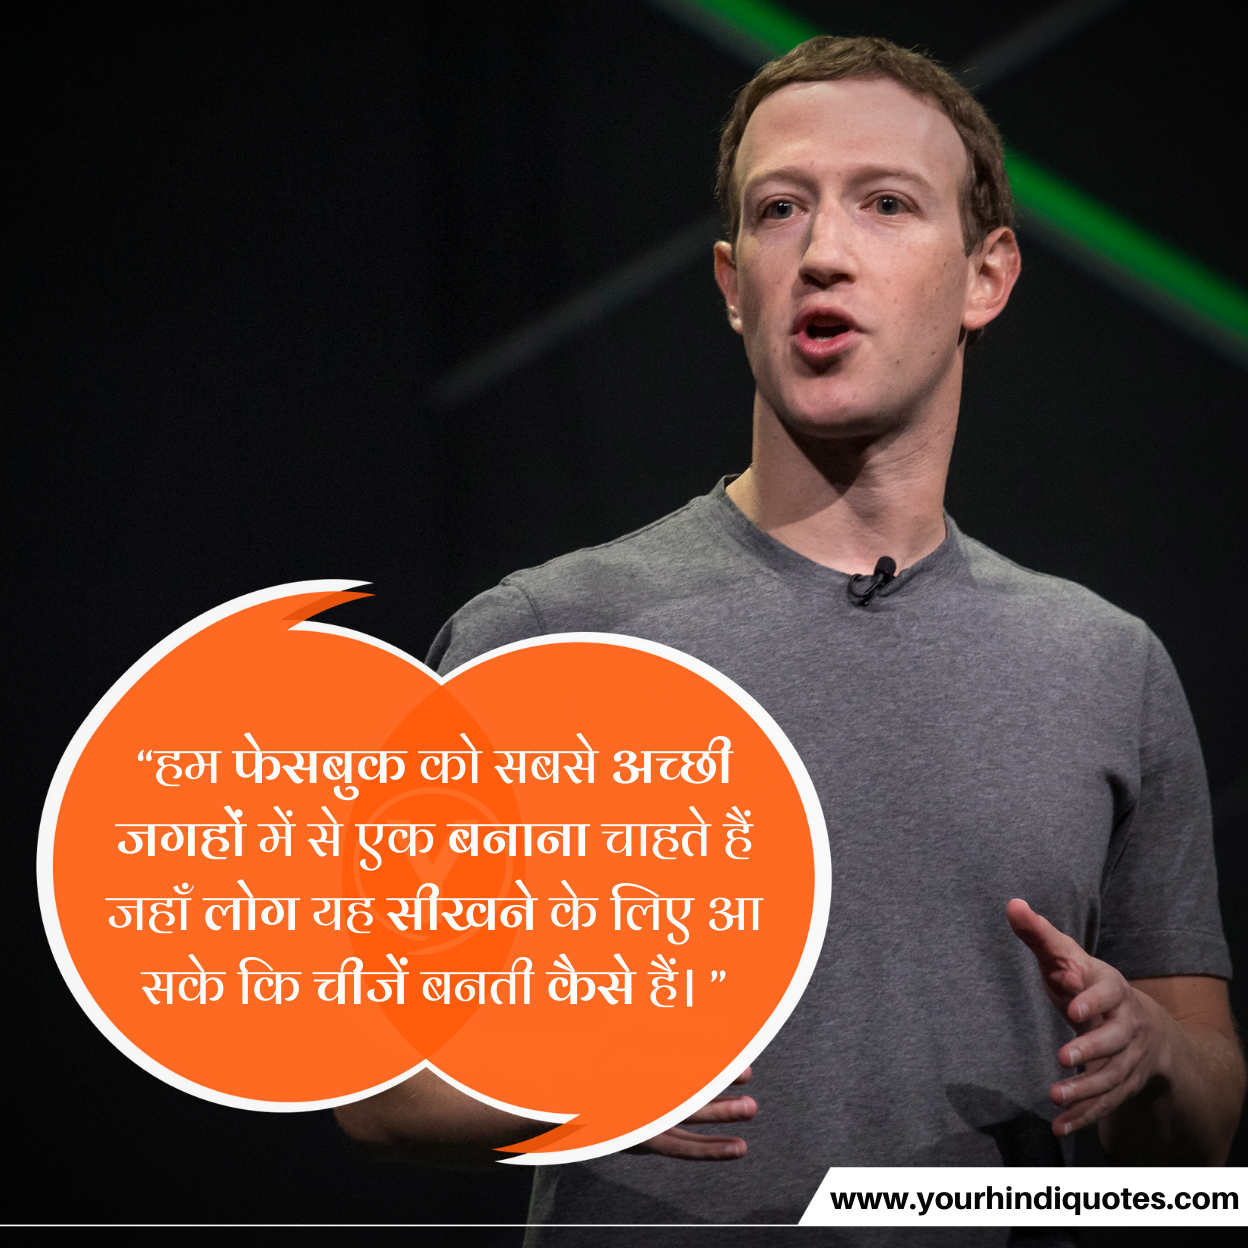 Mark Zuckerberg Quotes Images